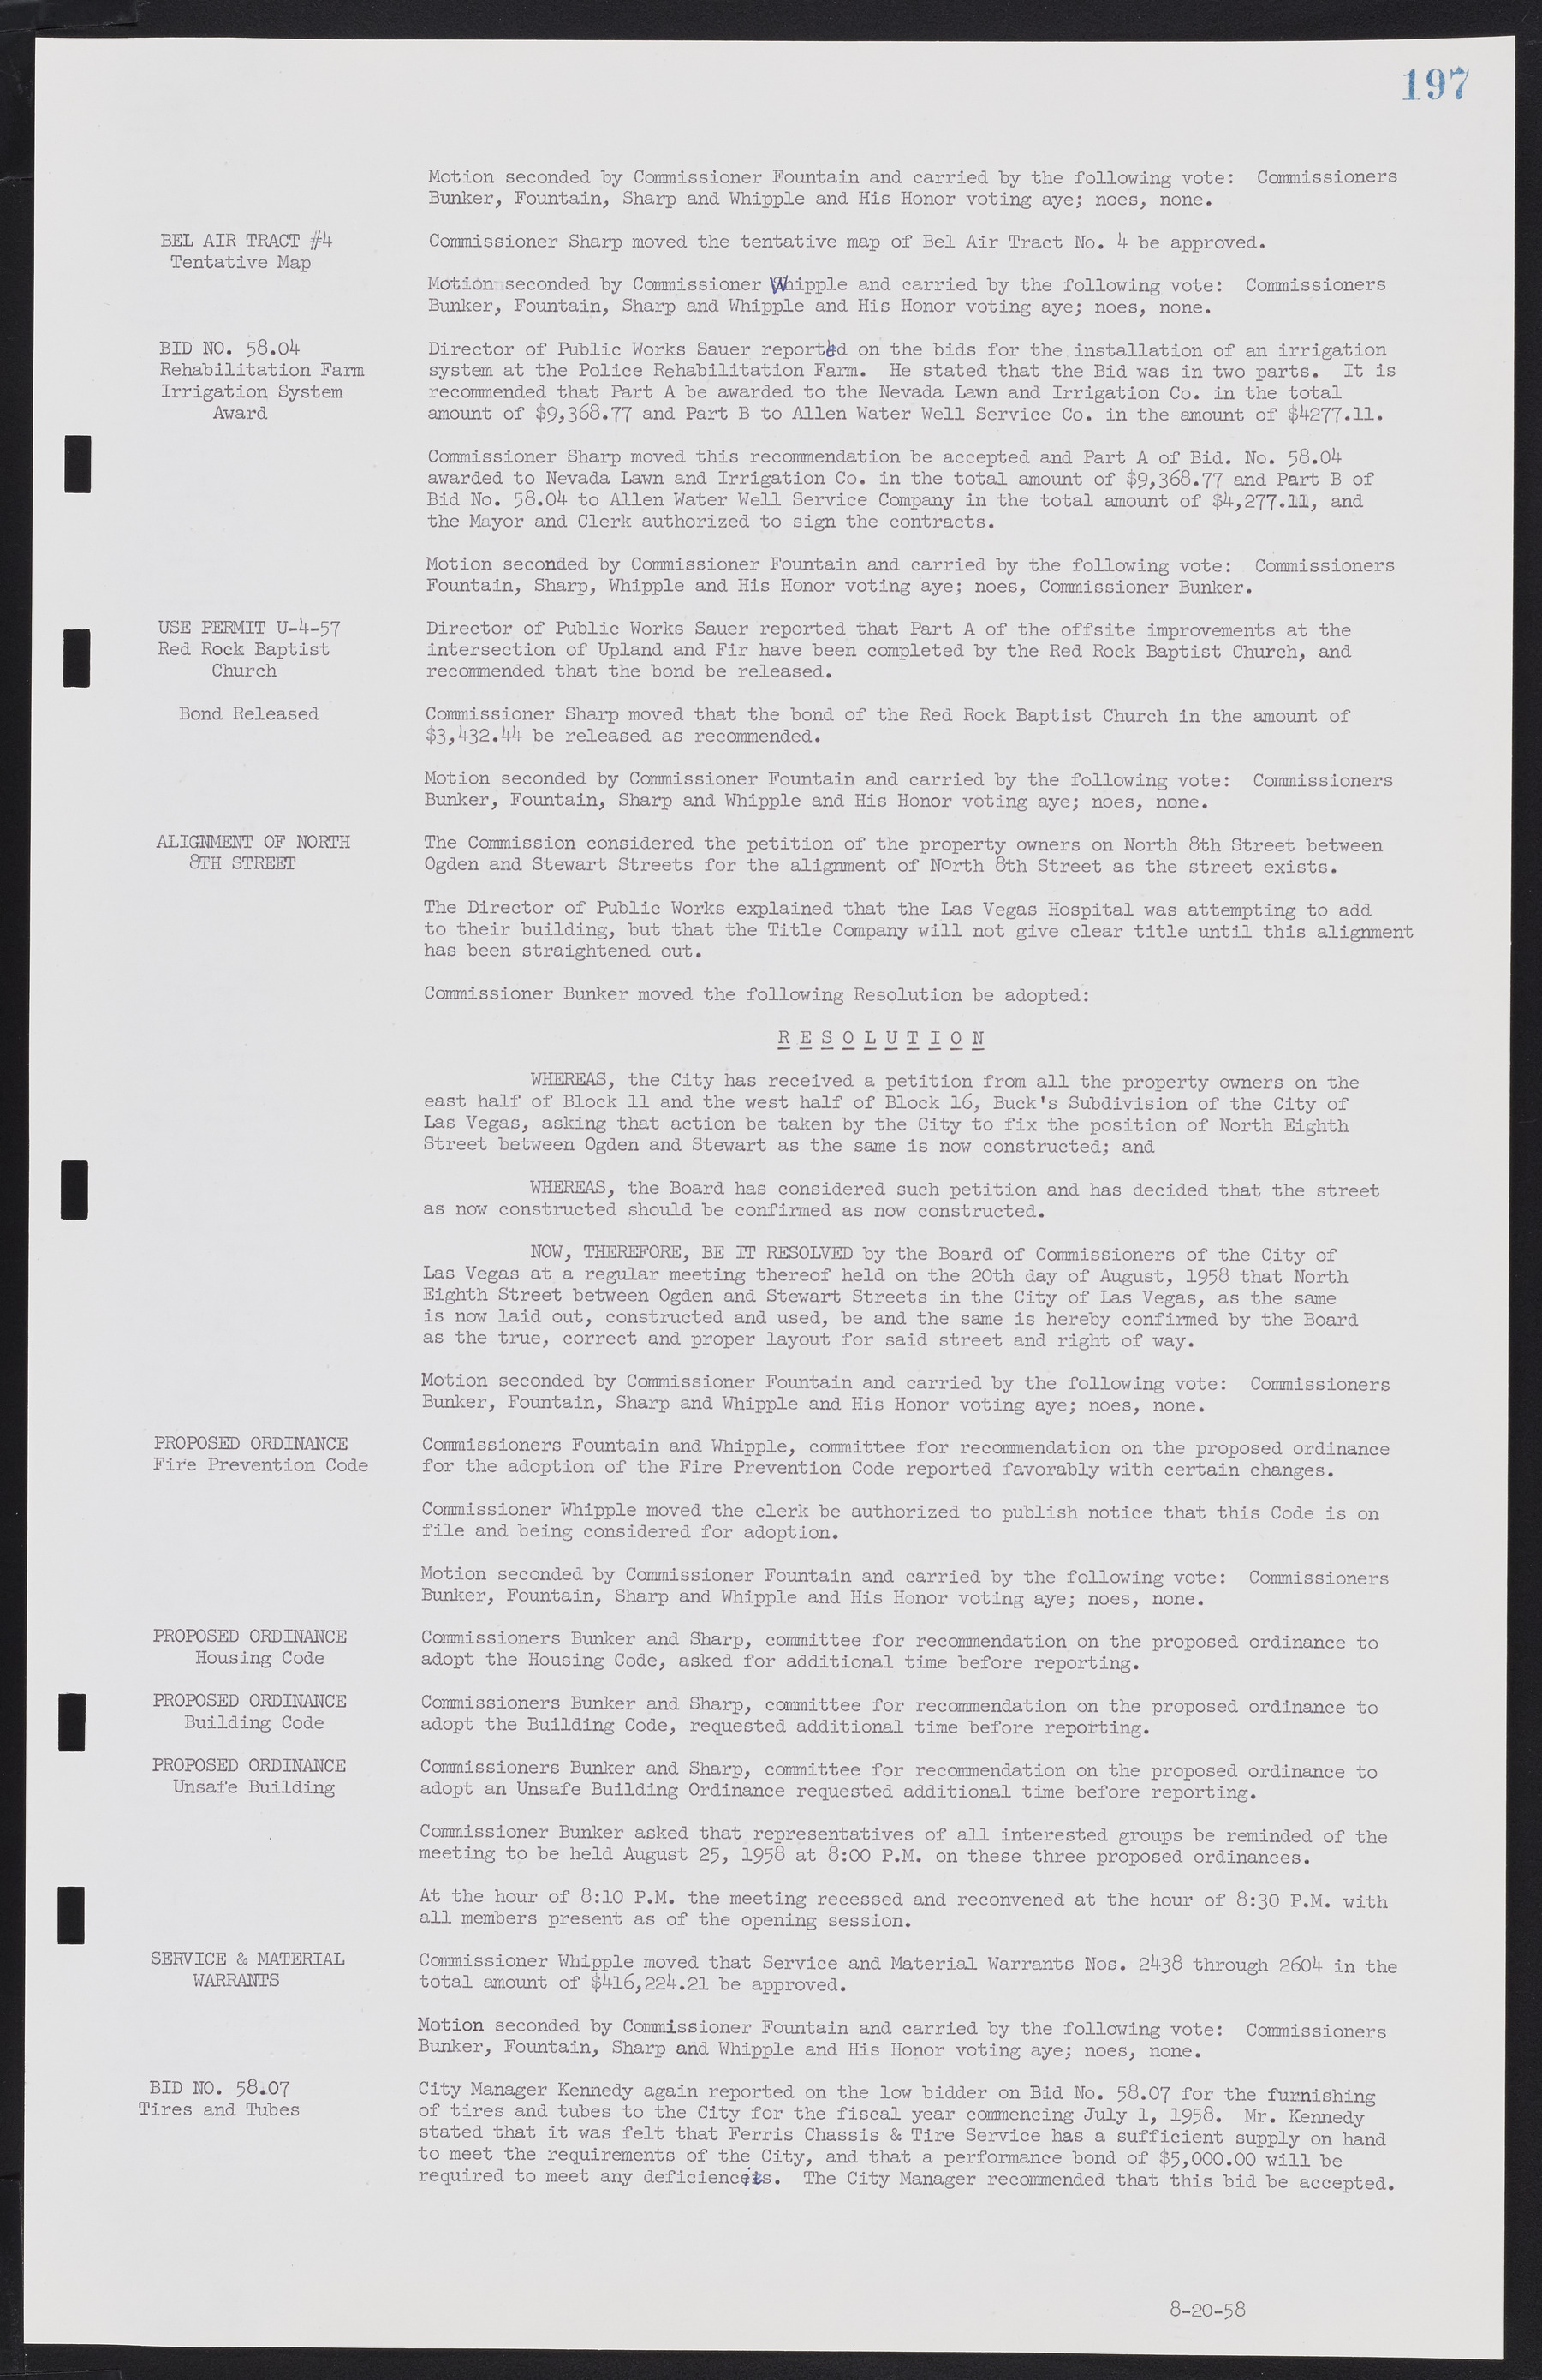 Las Vegas City Commission Minutes, November 20, 1957 to December 2, 1959, lvc000011-201